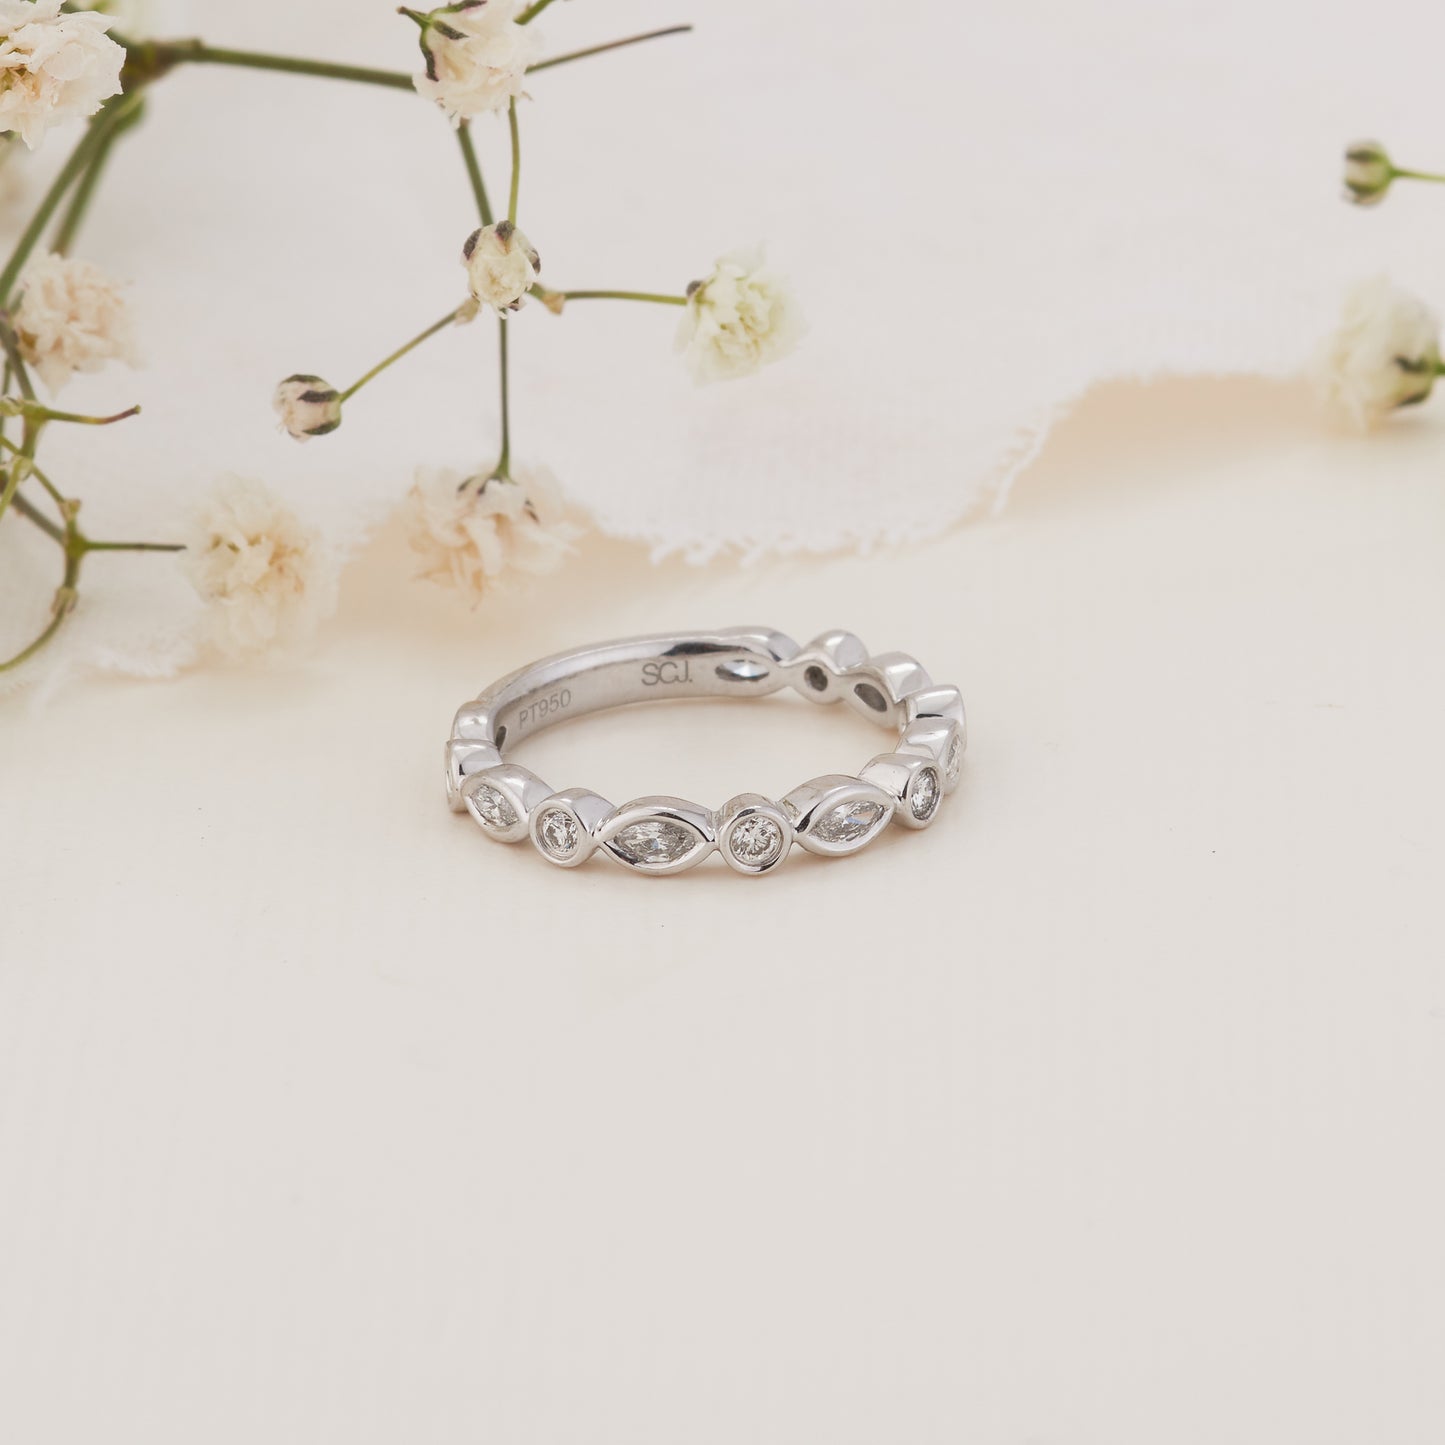 Platinum Vintage Inspired Marquise Diamond Wedder or Eternity Ring 0.50tdw